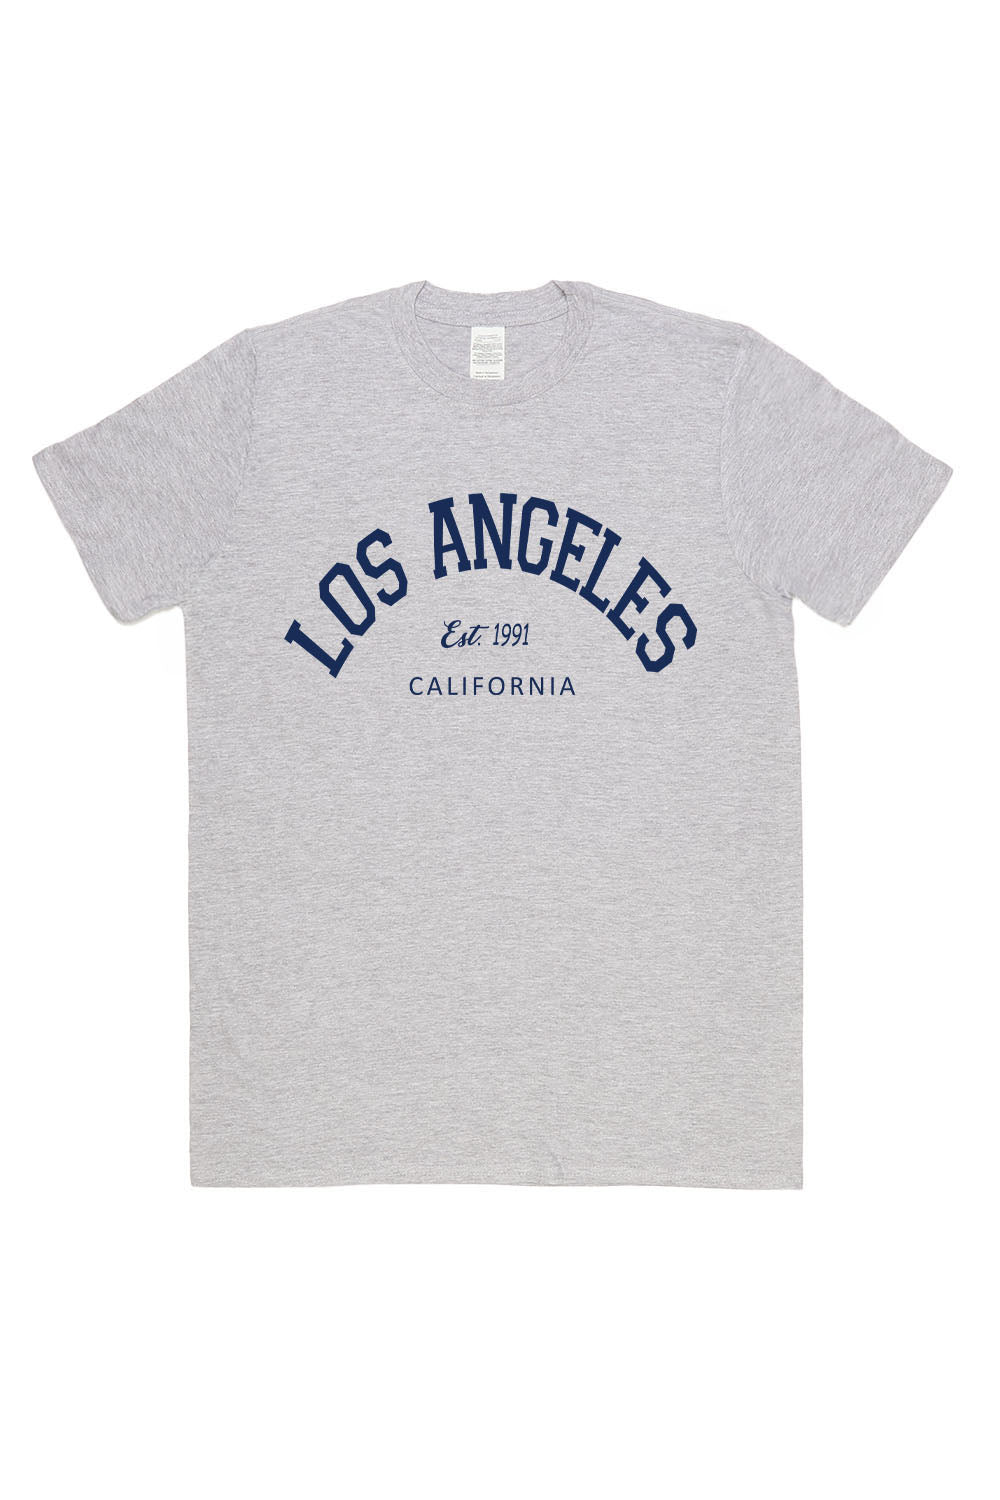 Los Angeles T-Shirt in Ash Grey(Custom Packs)